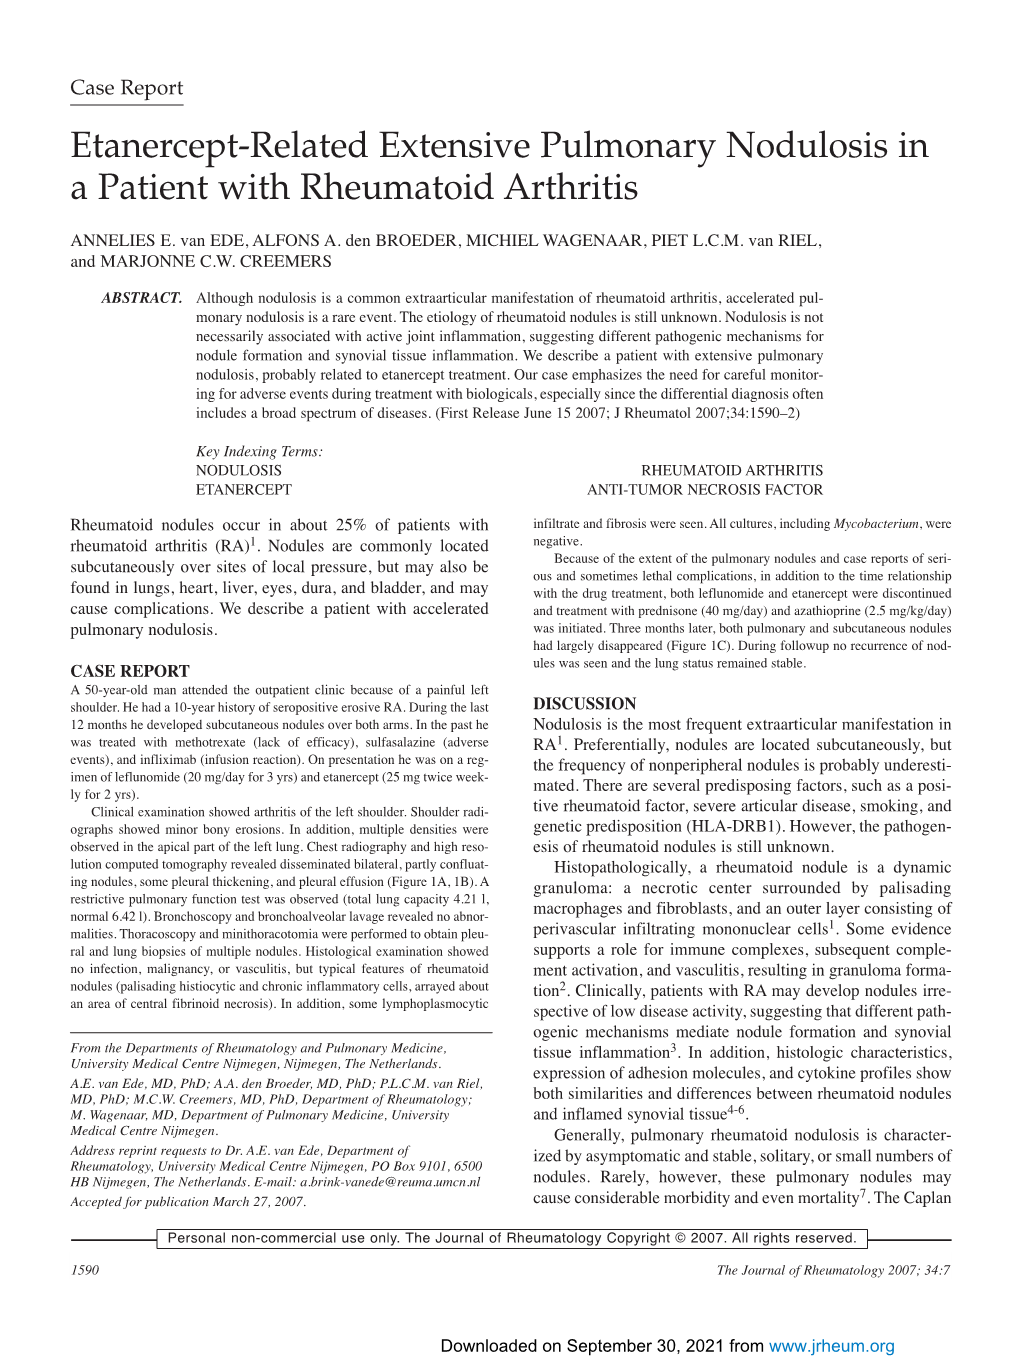 Etanercept-Related Extensive Pulmonary Nodulosis in a Patient with Rheumatoid Arthritis